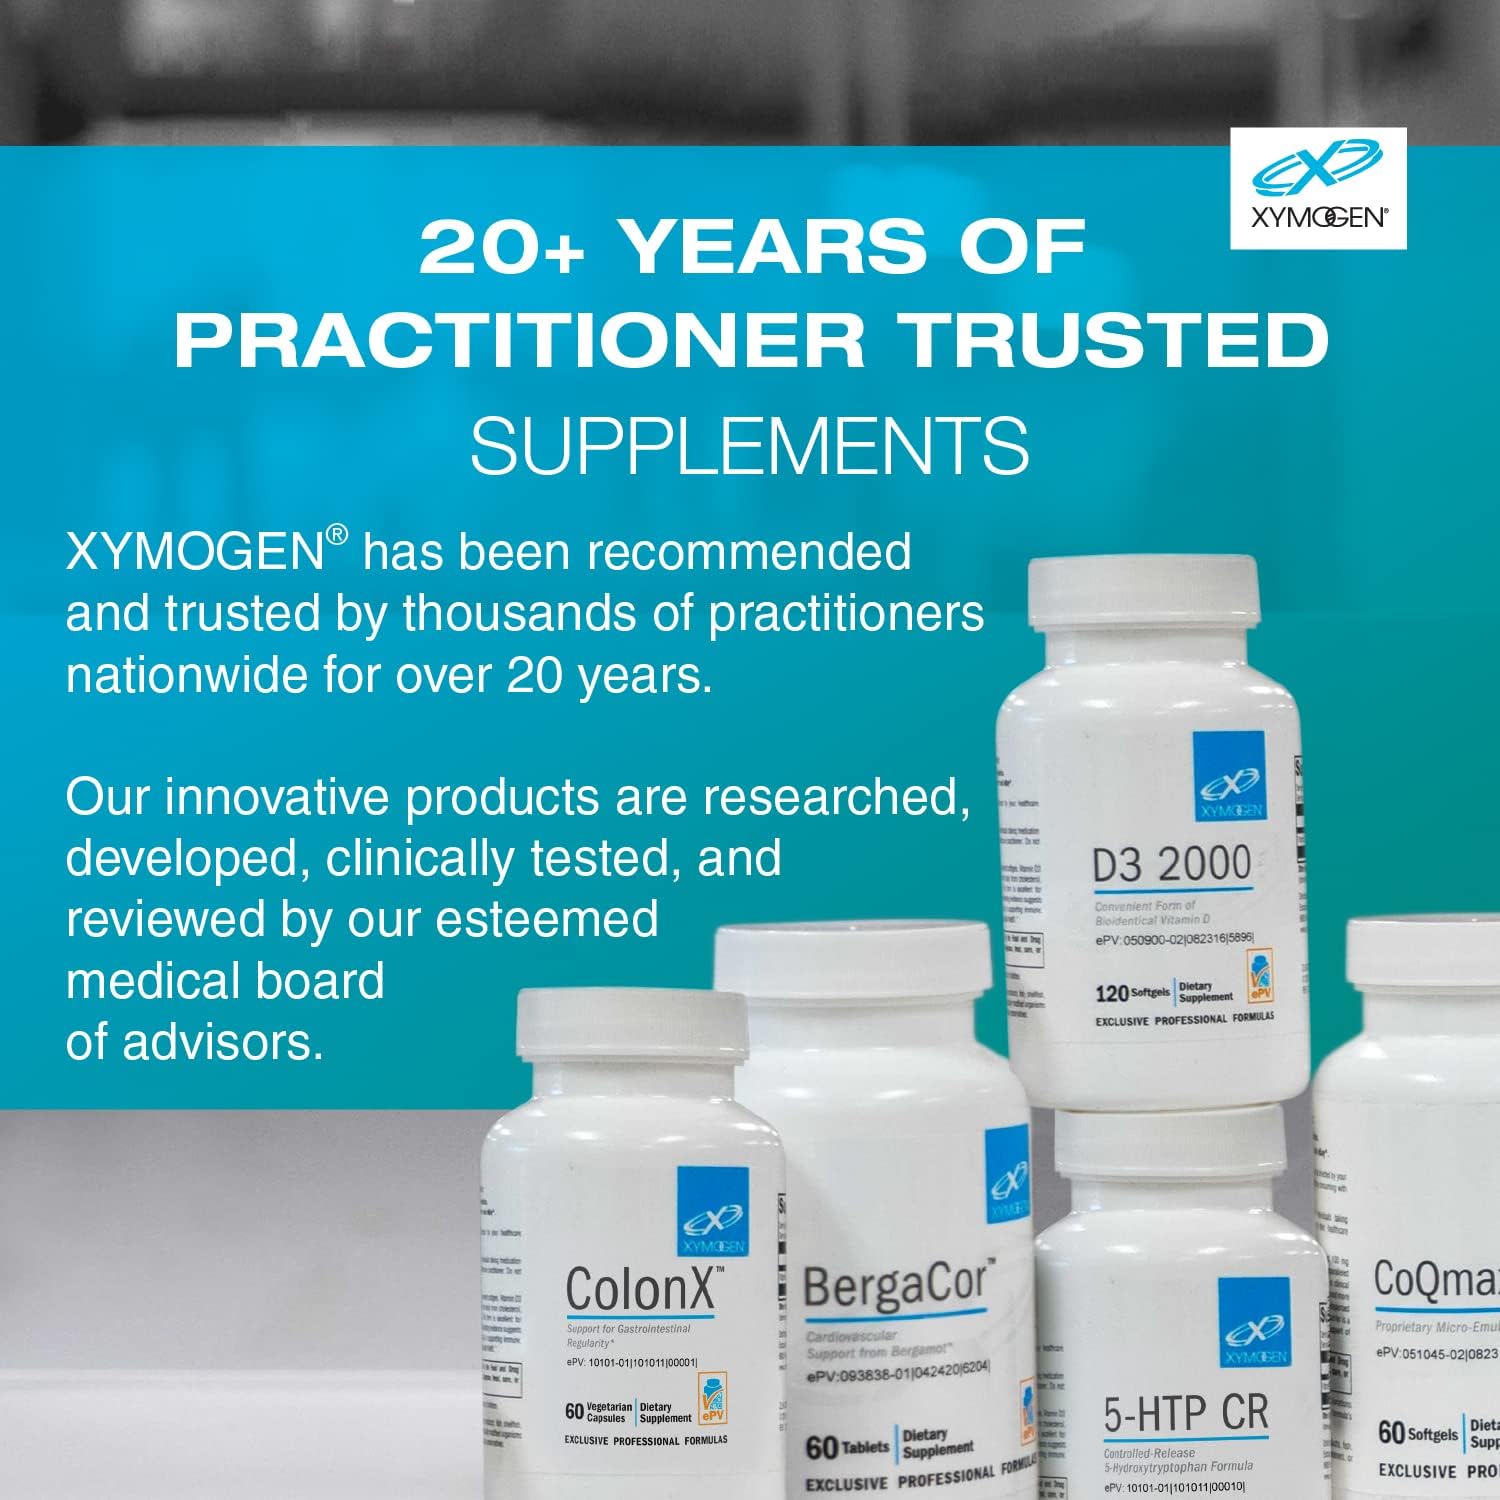 XYMOGEN Xcellent A 7500-25,000 IU High-Potency Vitamin A Supplement (R